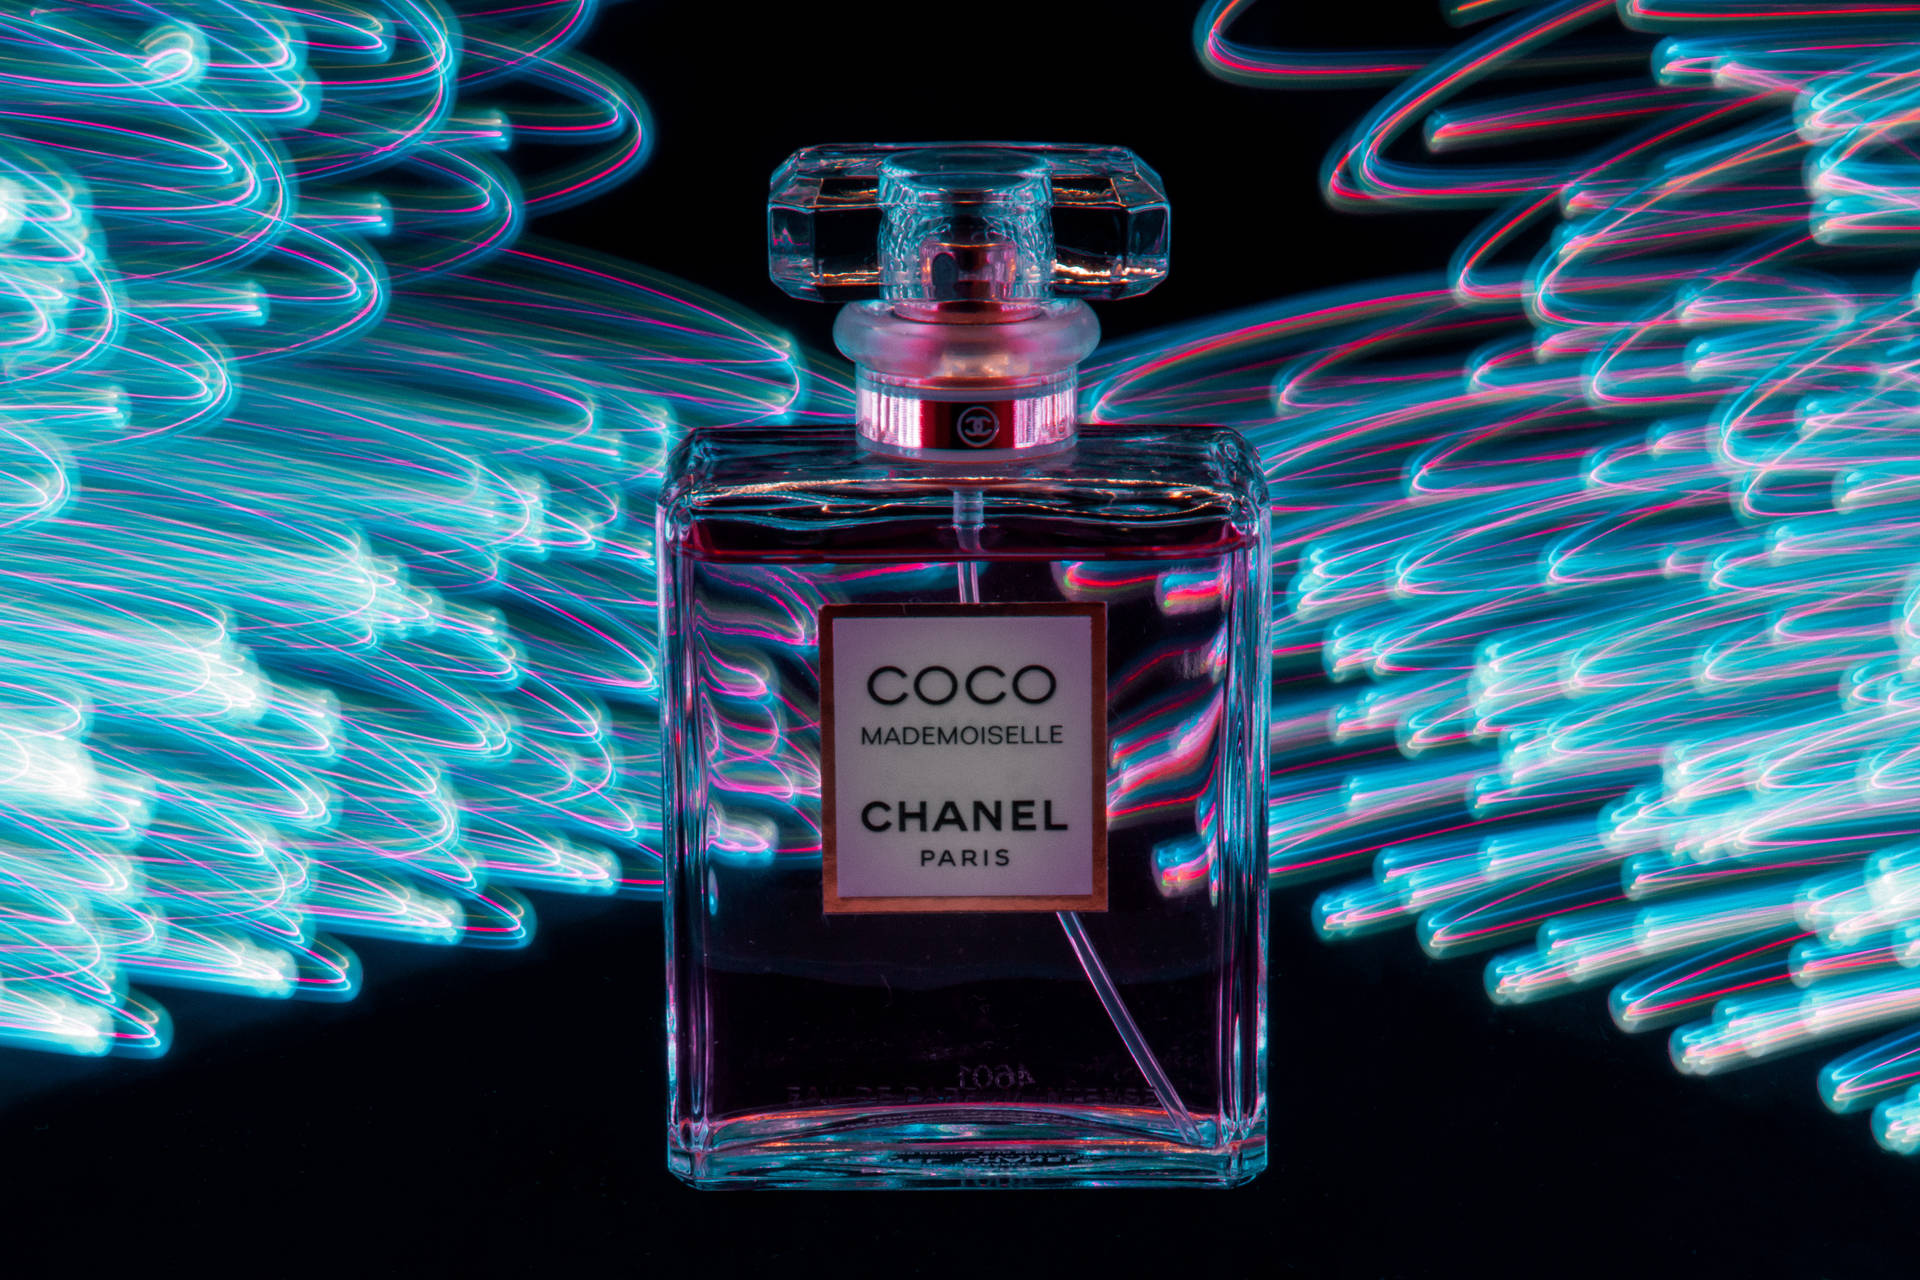 Chanel Coco Mademoiselle Neon Art